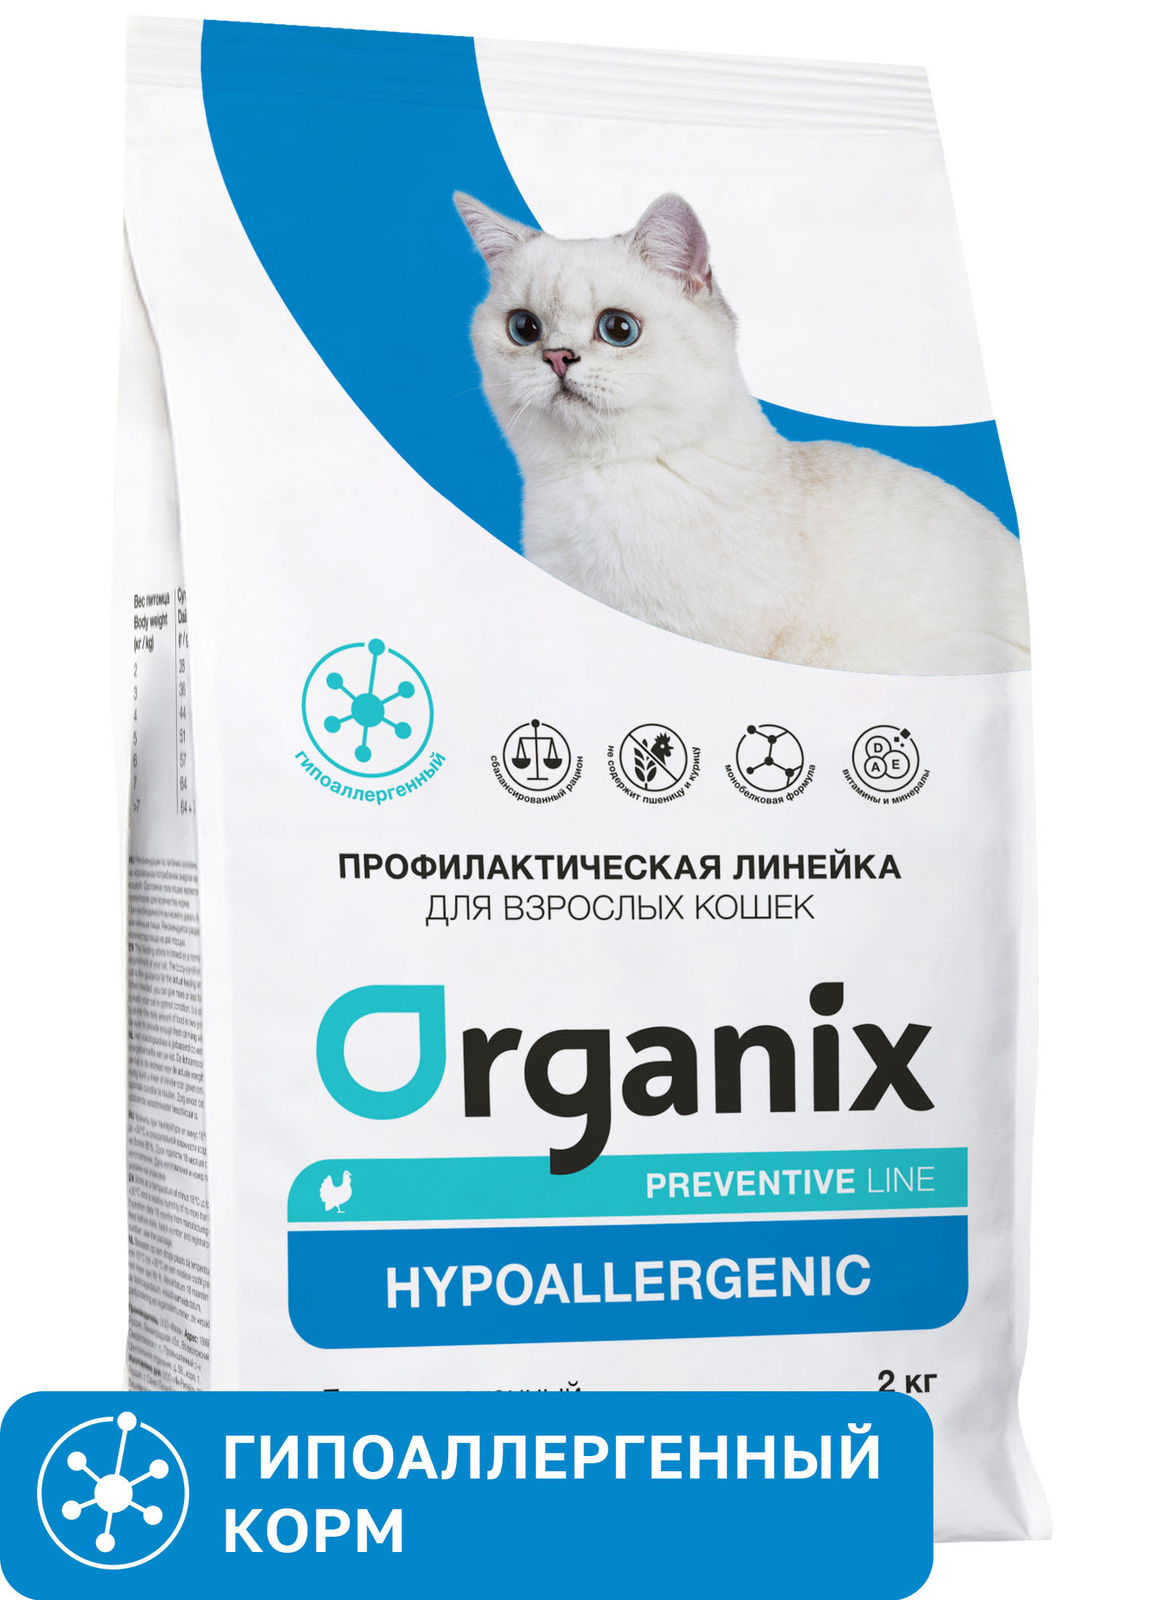 Organix Preventive Line hypoallergenic сухой корм для кошек 